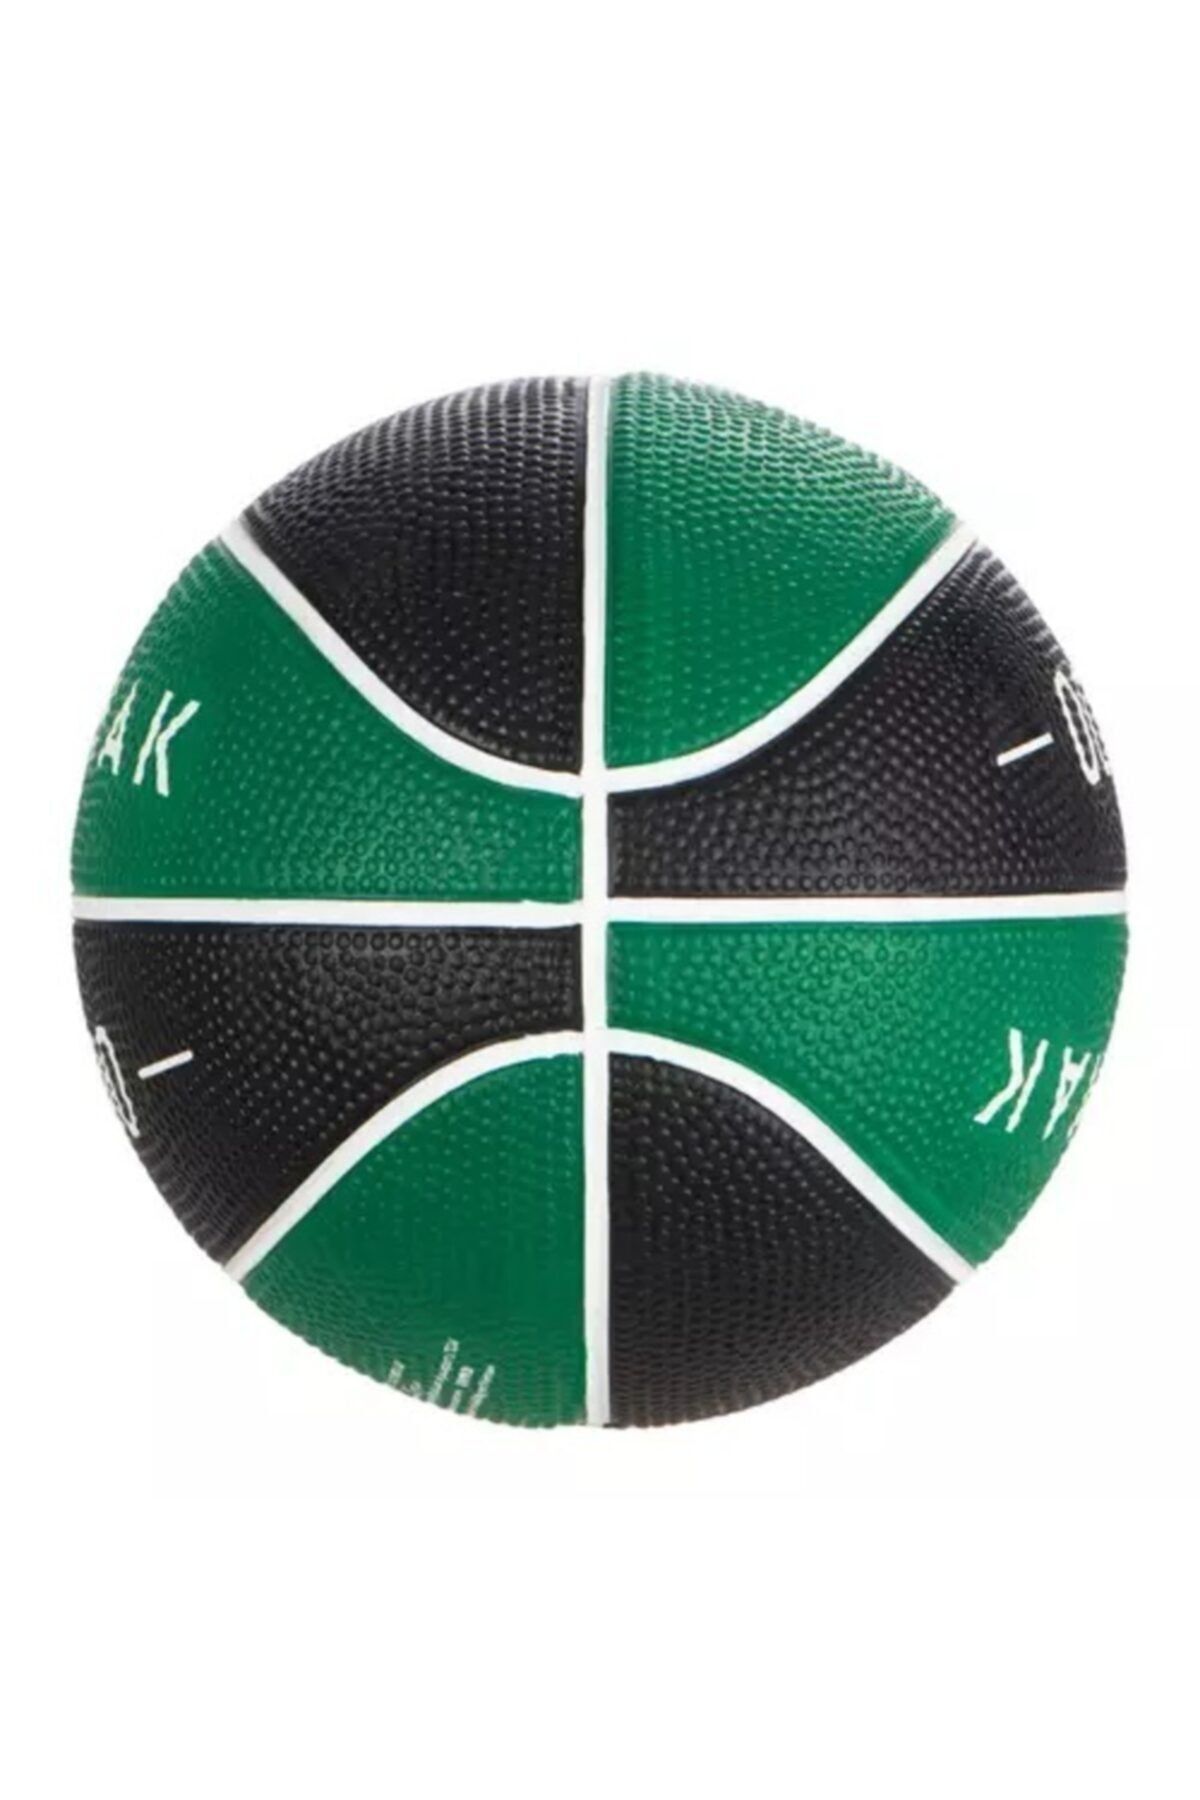 Active Sport Yeşil Mini Basketbol Topu K100